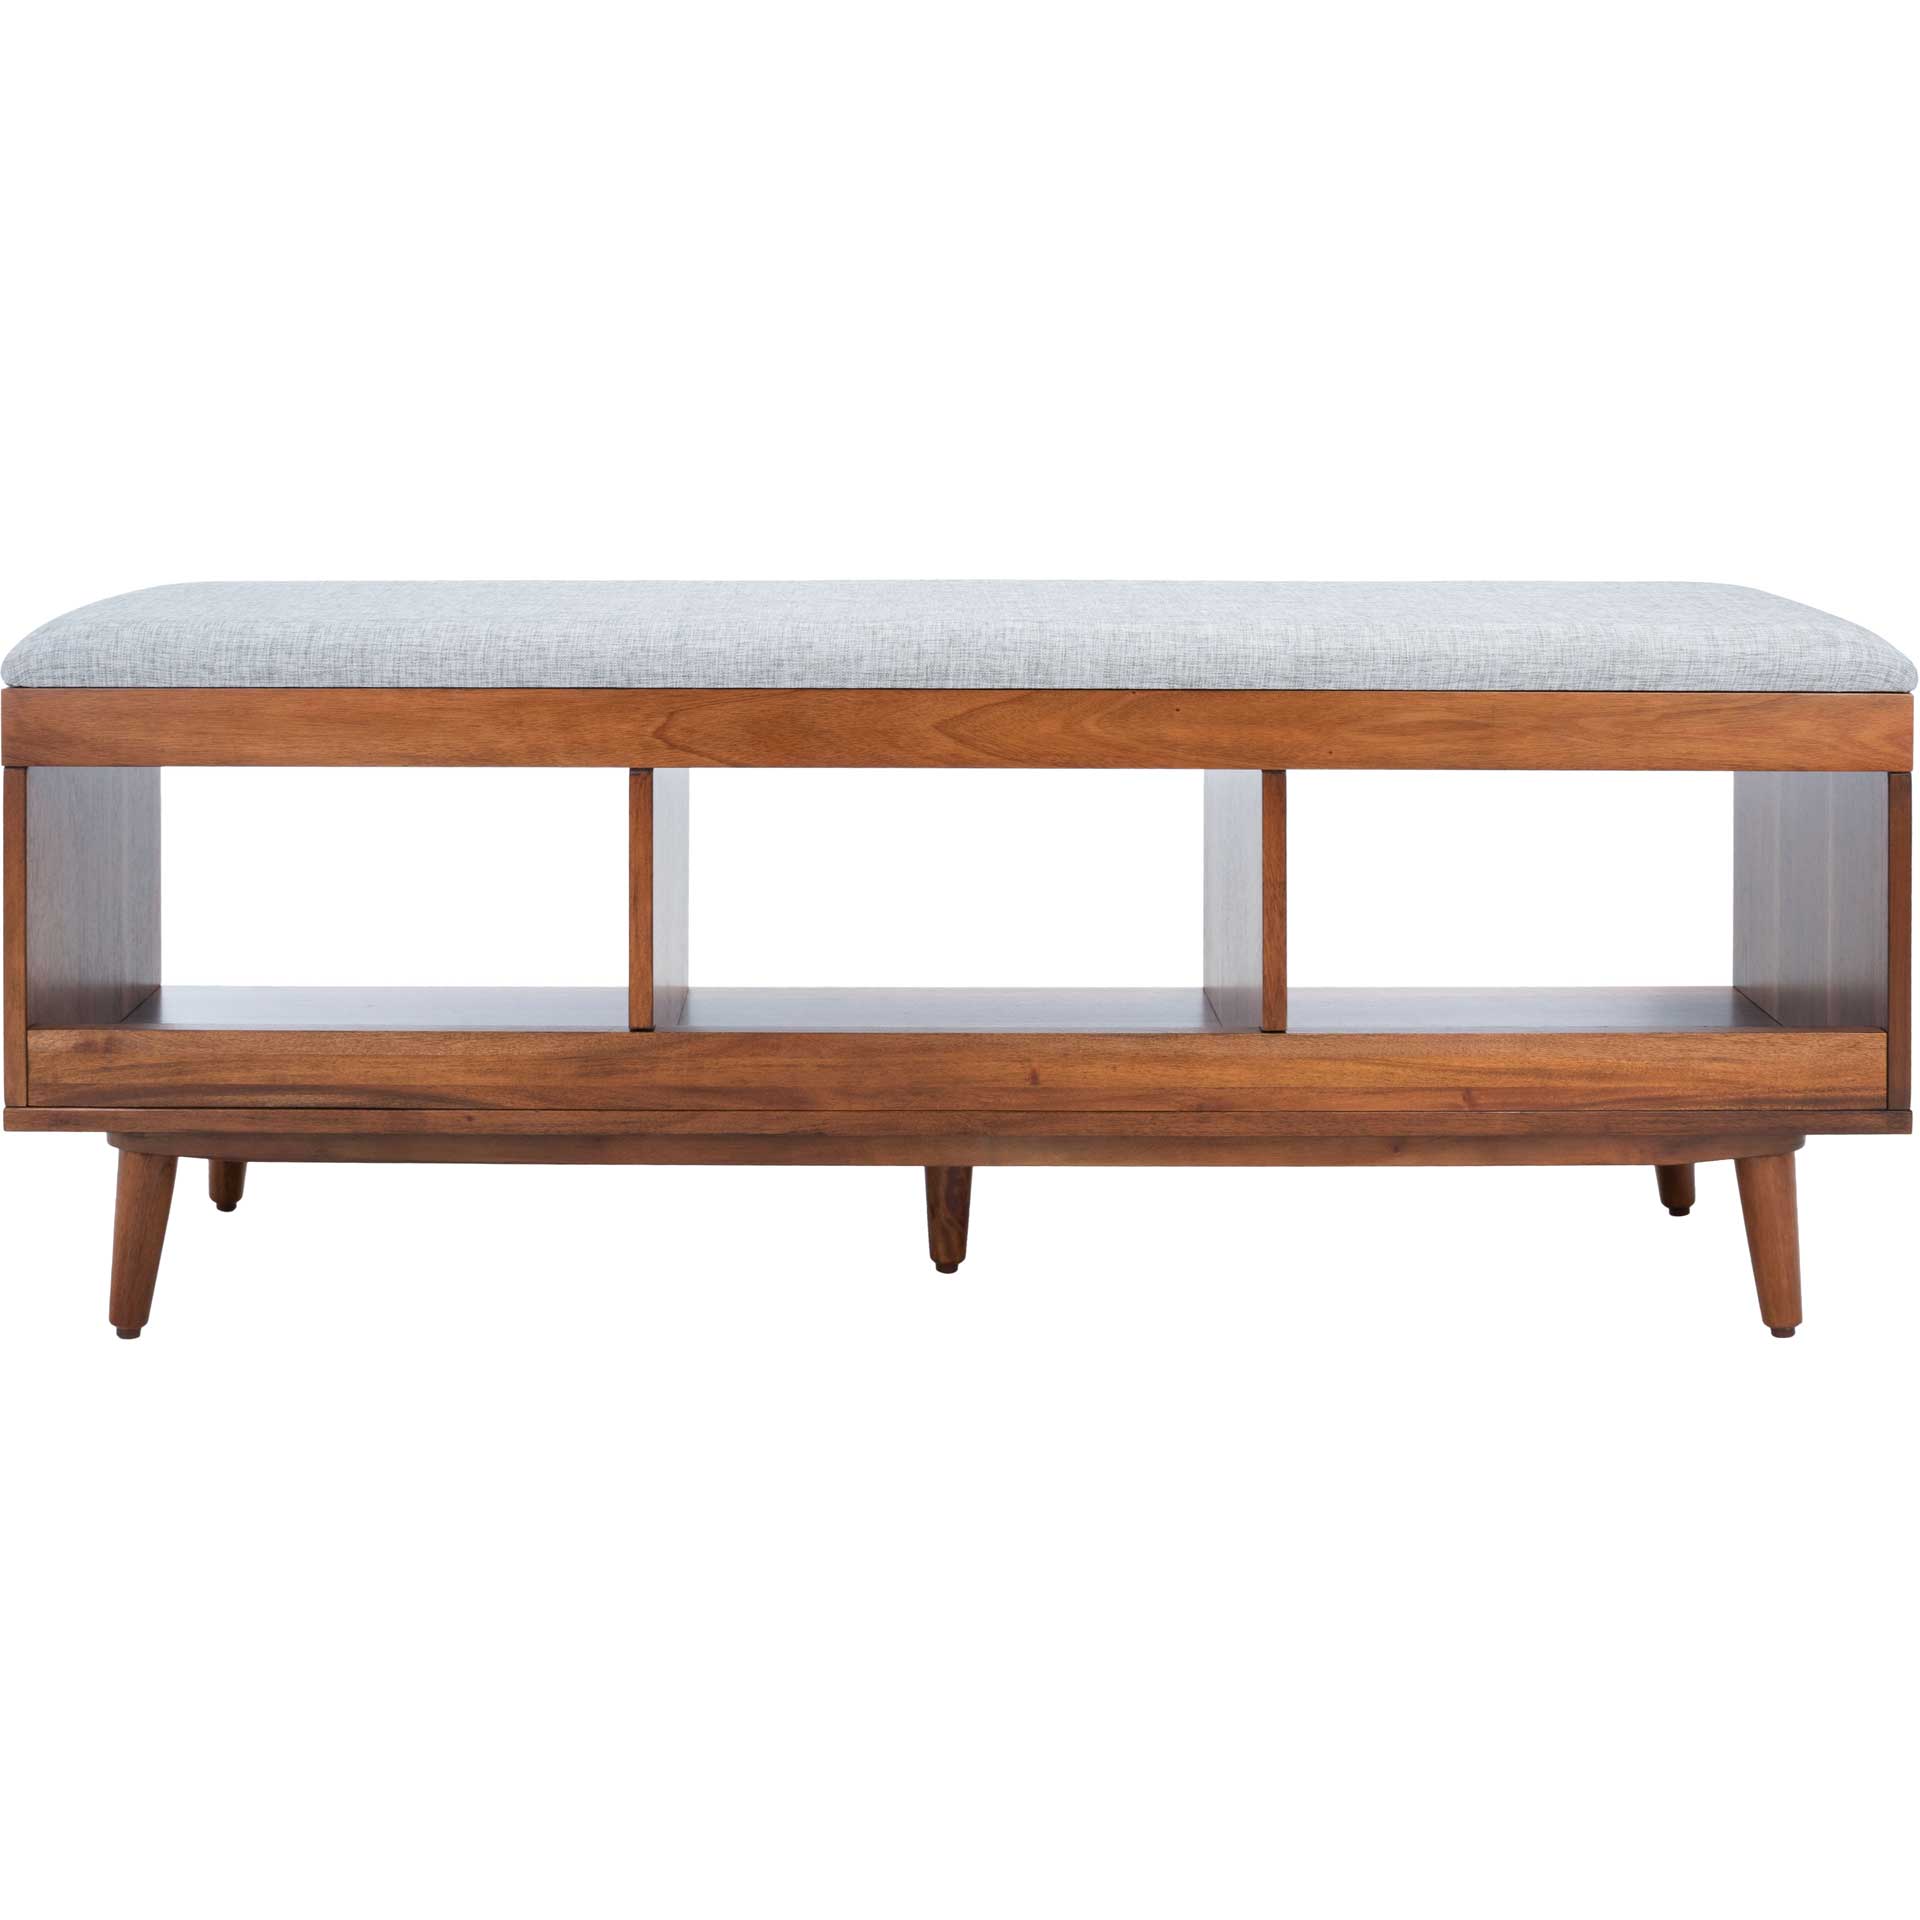 Crane Open Shelf Bench With Cushion Gray/Natural